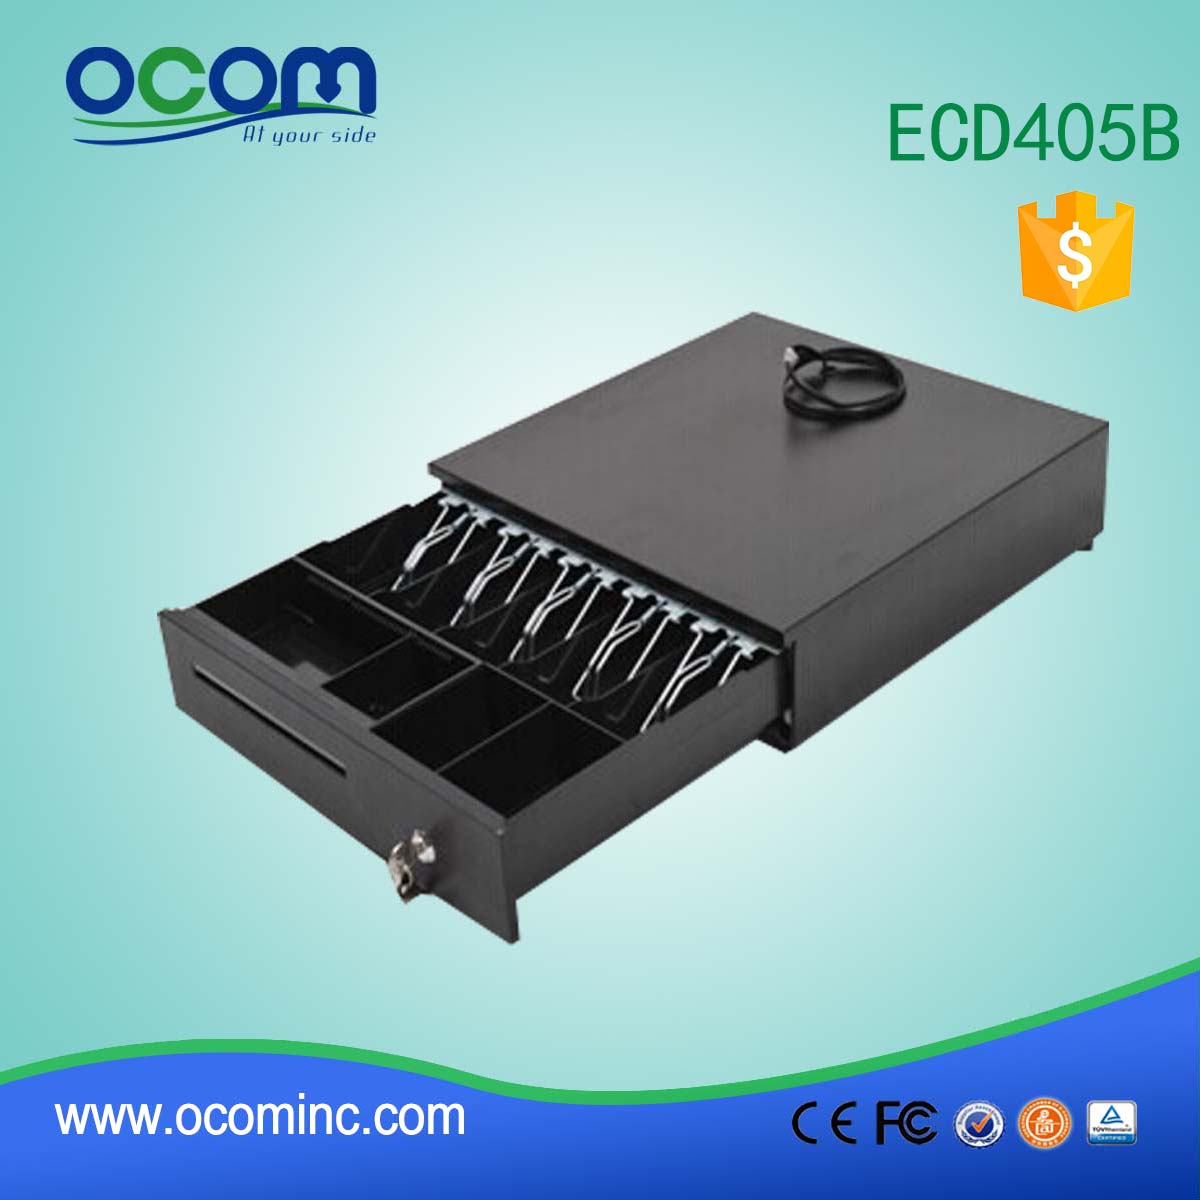 ECD405B Czarna removable cash / Coin tray 405mm POS Cash Drawer